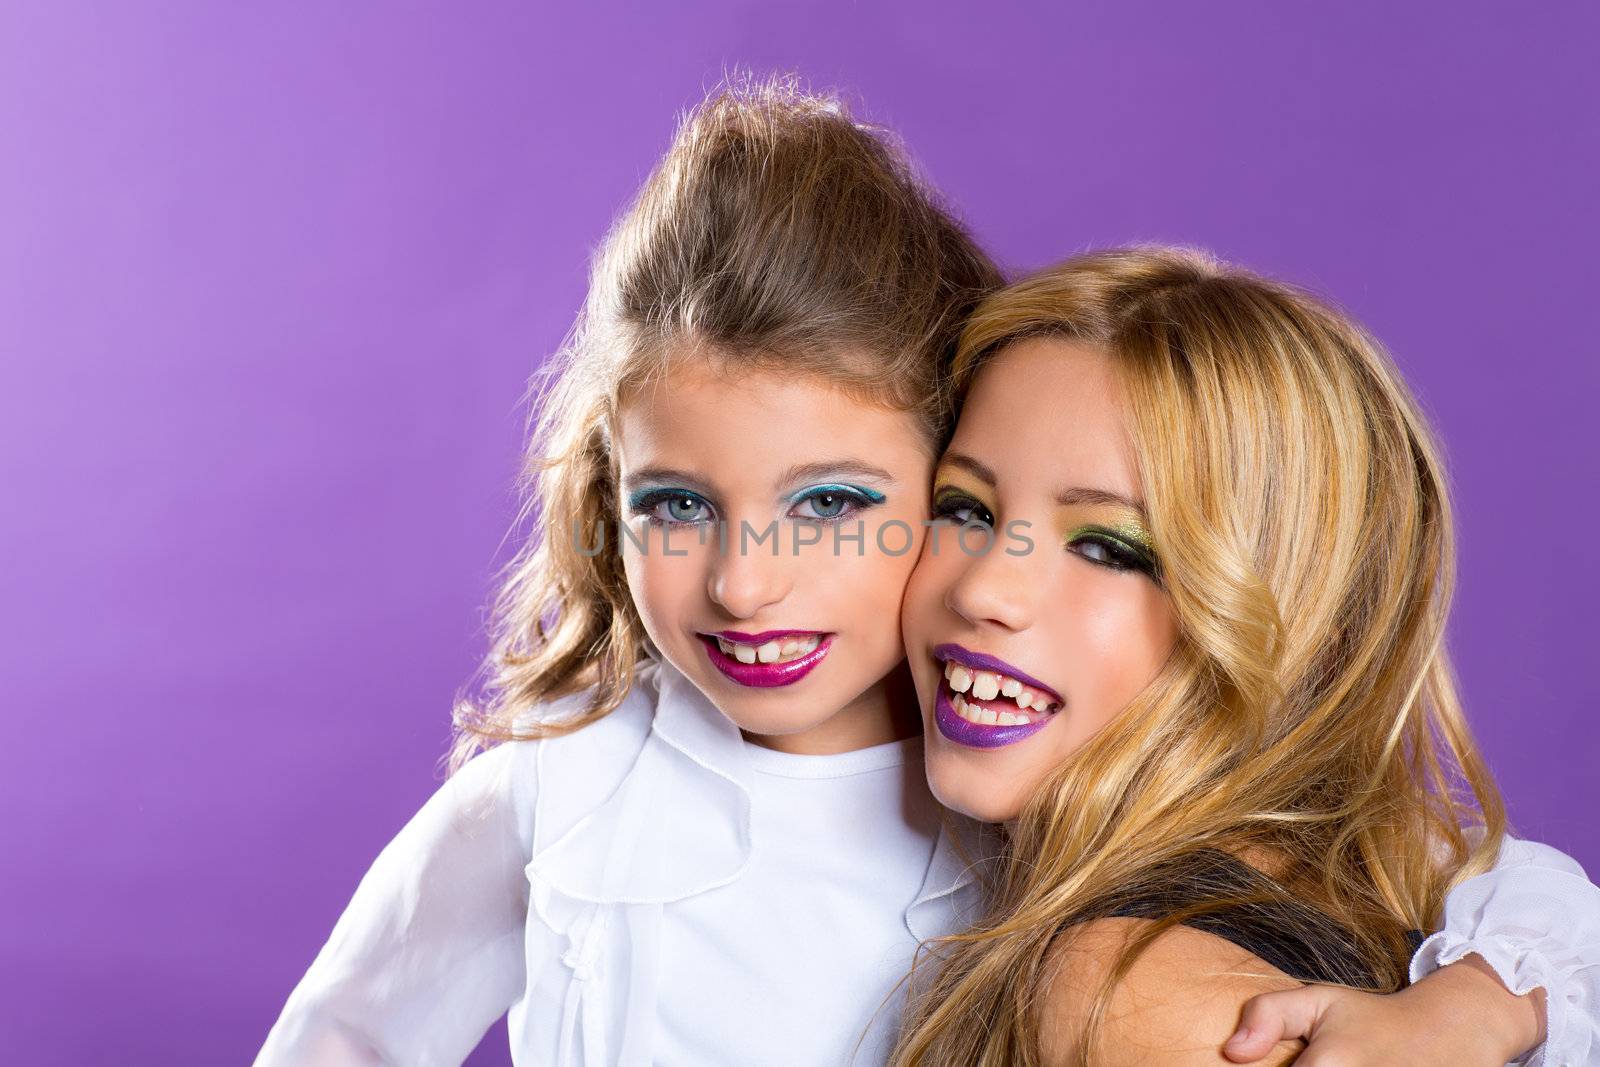 children two fashiondoll kid girls good friends with fashion makeup on purple